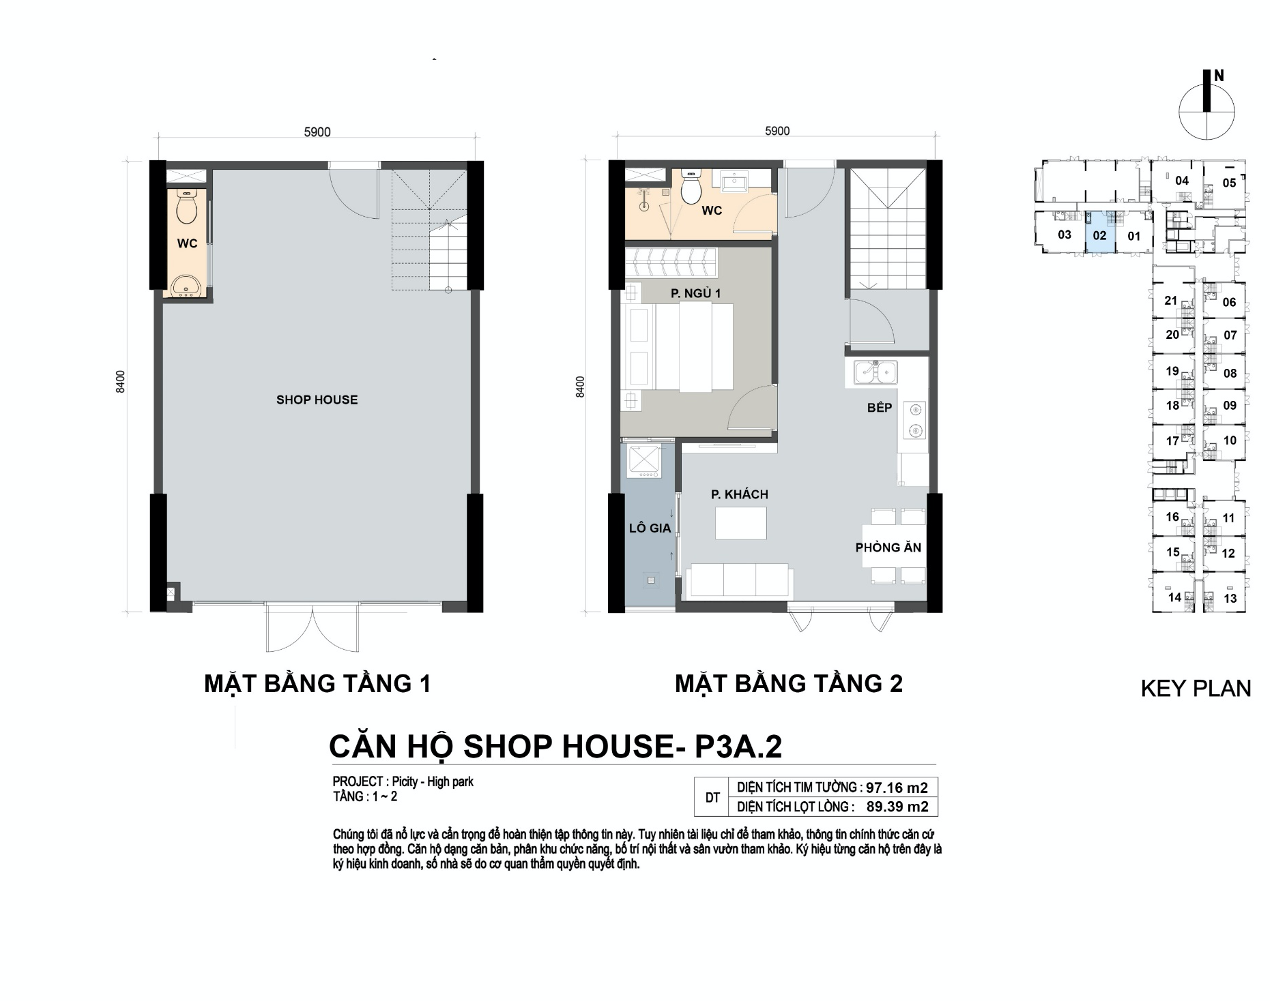 Thiết kế căn hộ Shophouse P3A.2